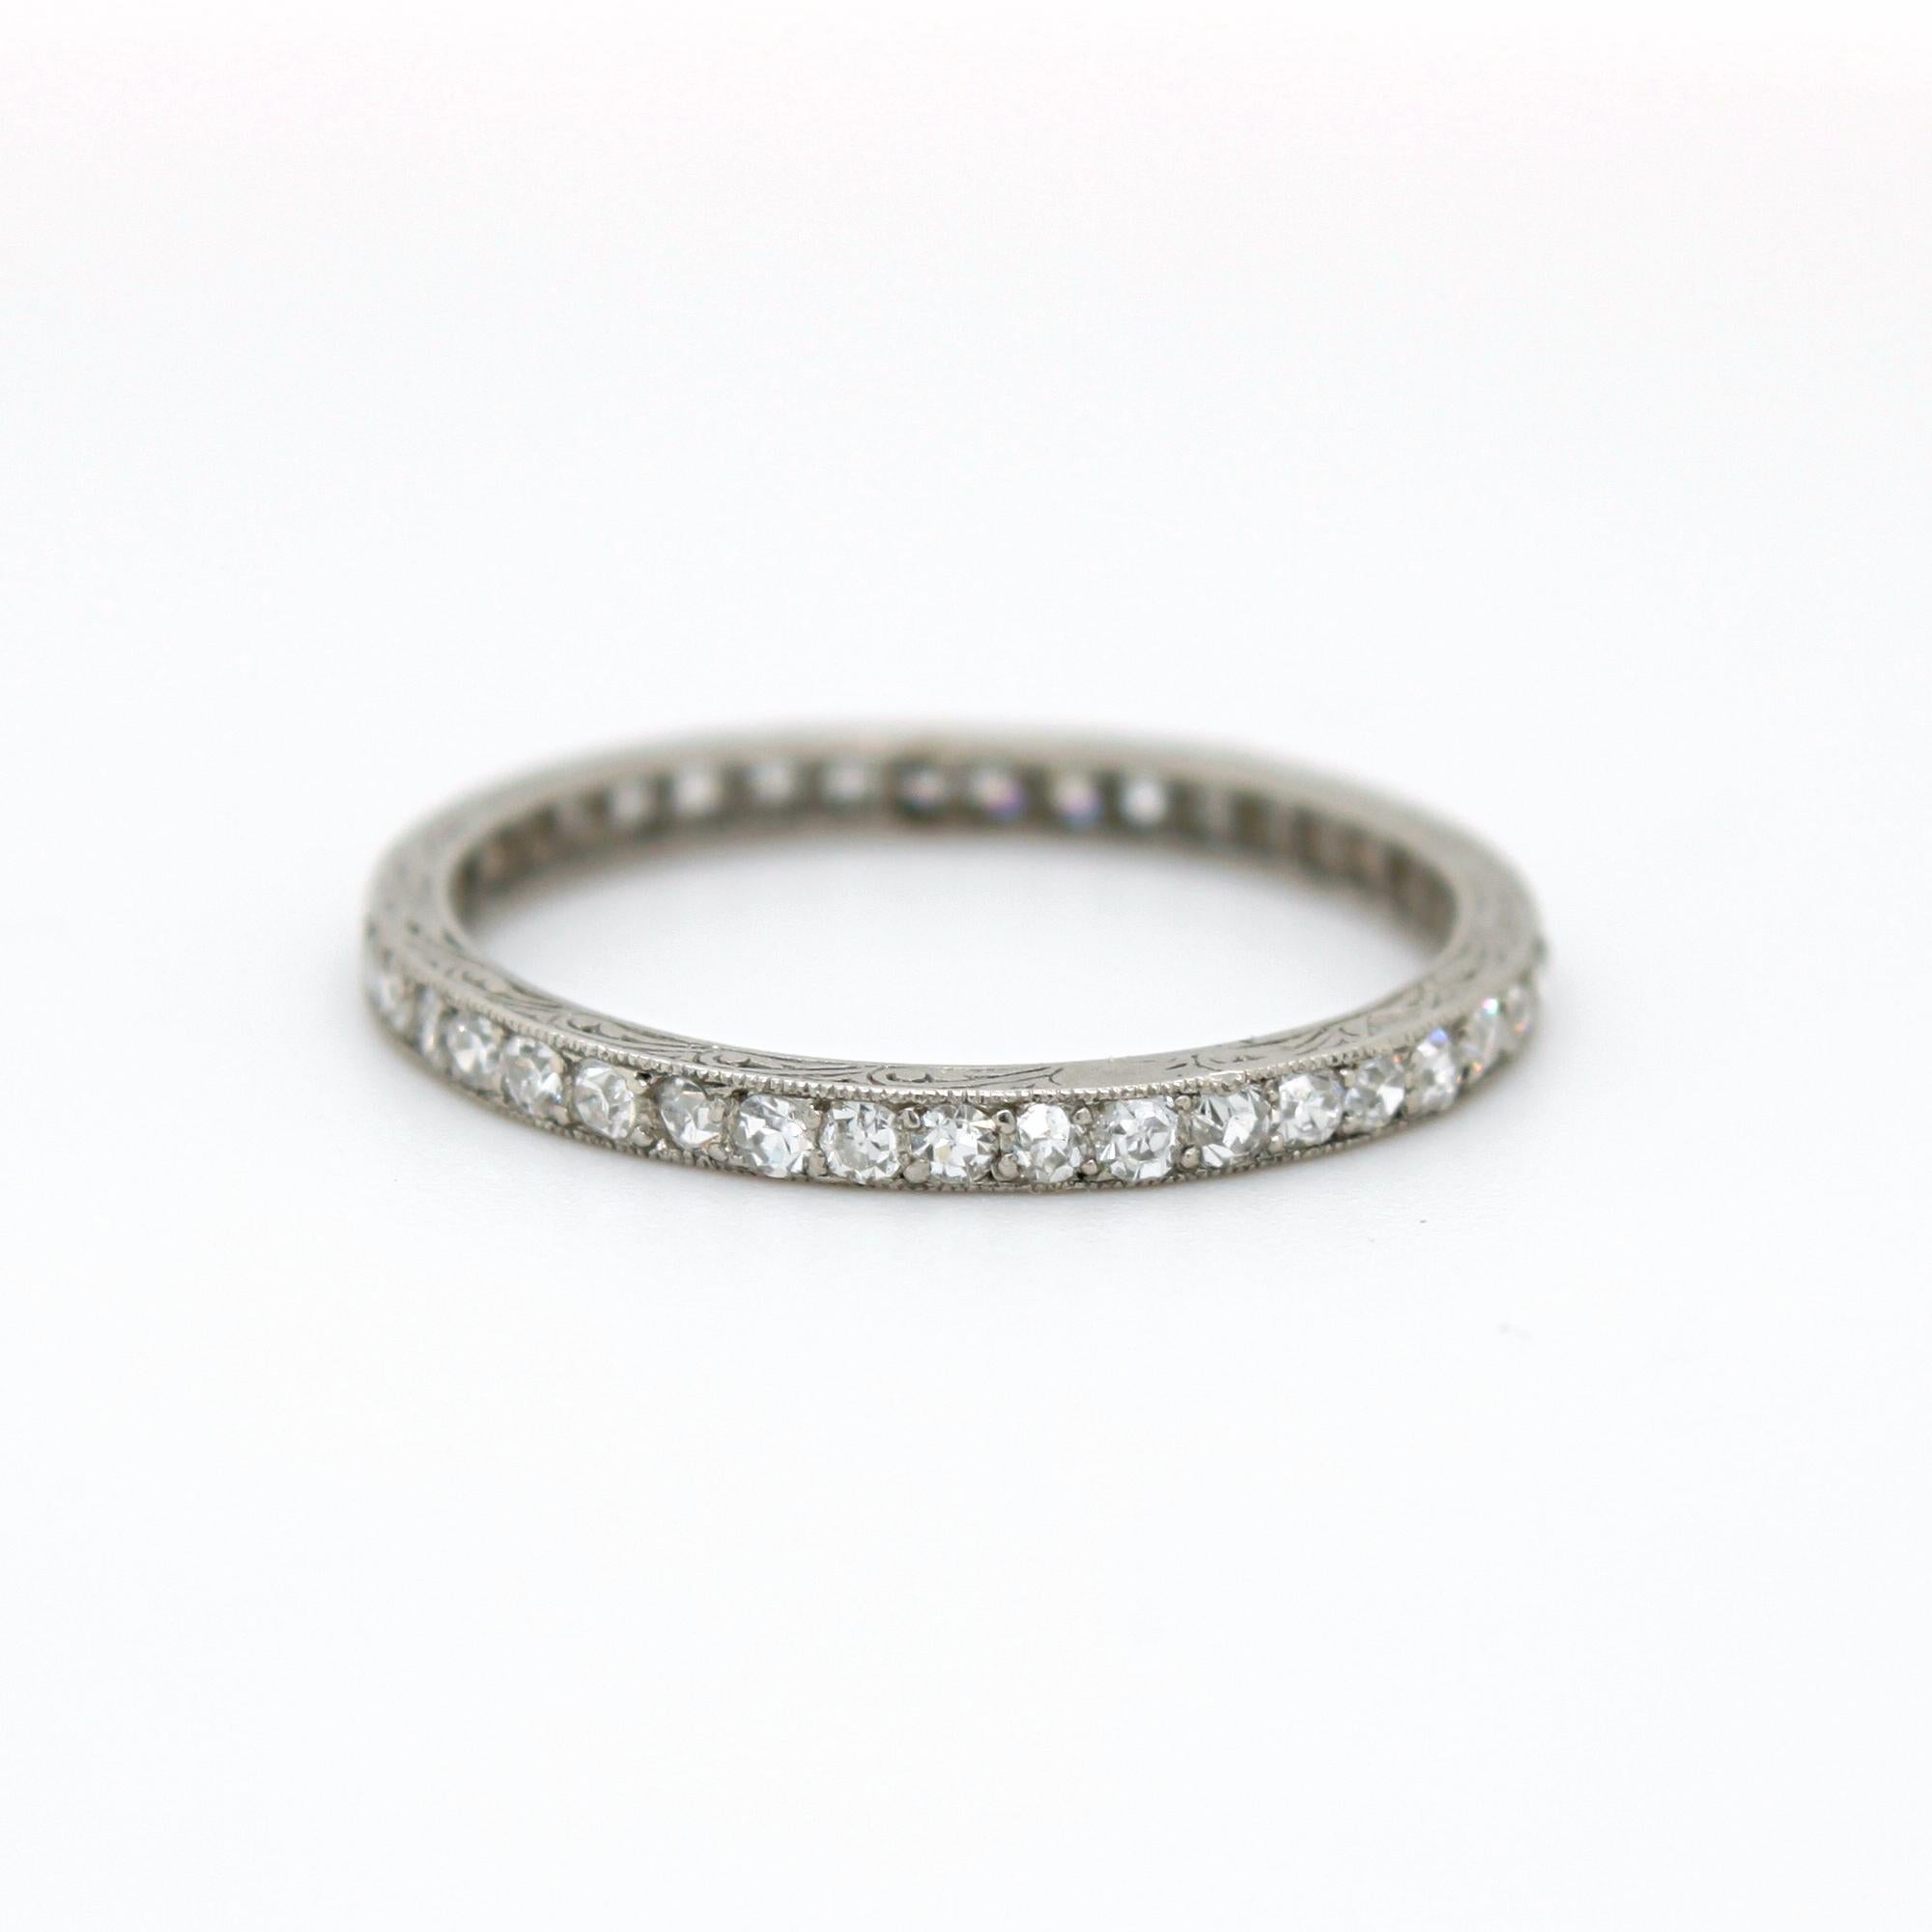 Edwardian Lacloche Diamond Eternity Wedding Band Ring, circa 1910s